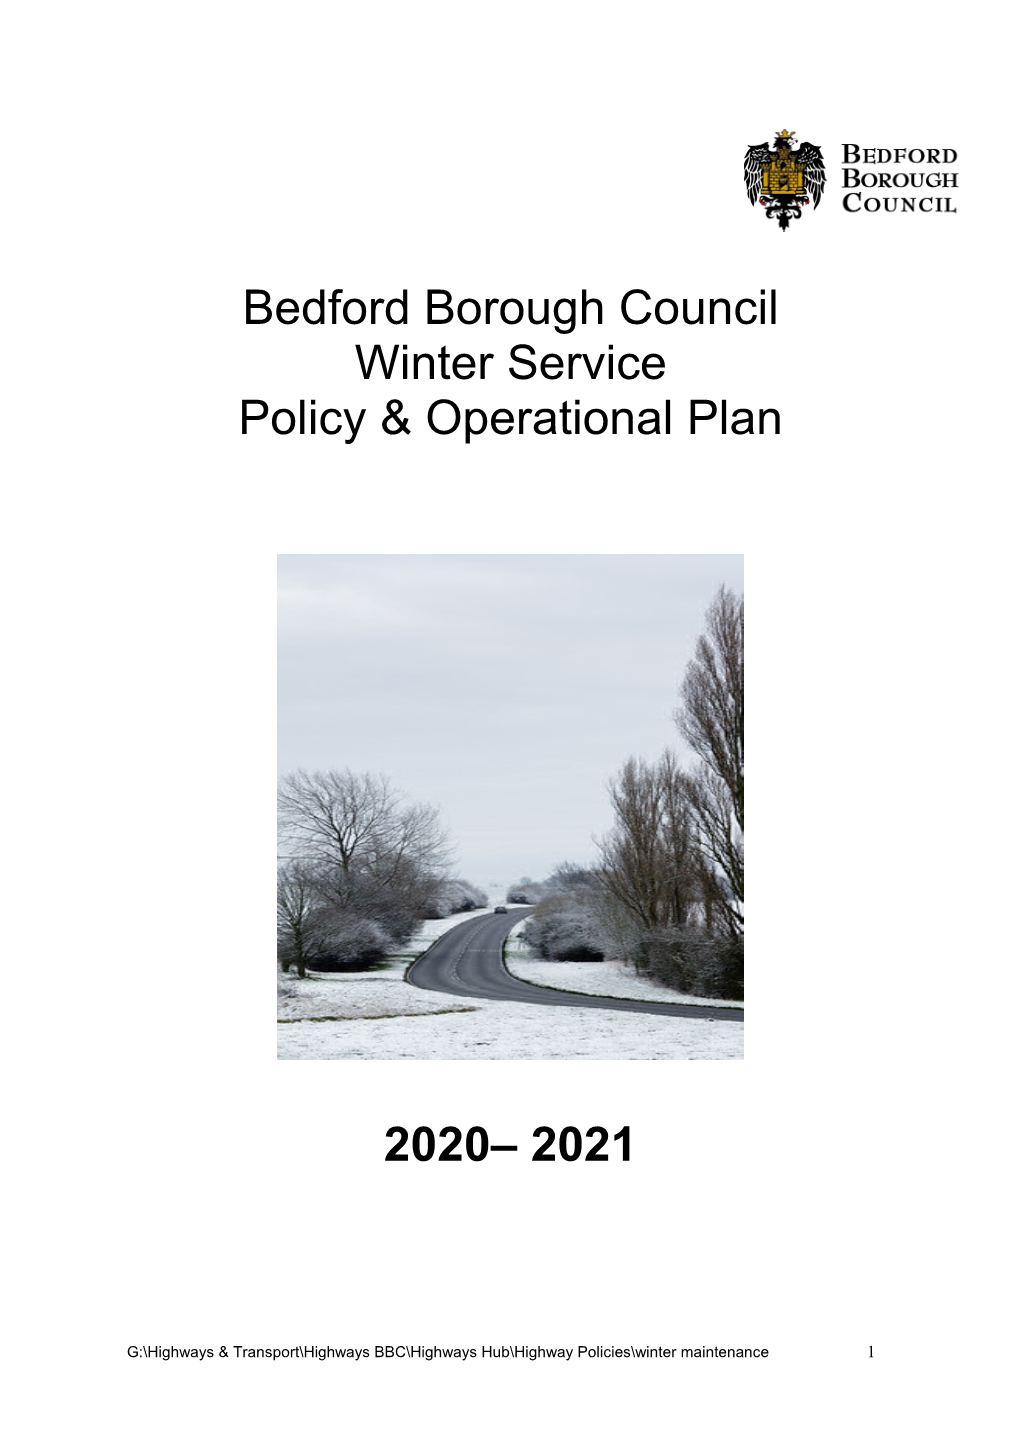 Bedford Borough Council Winter Service Operational Plan 2020